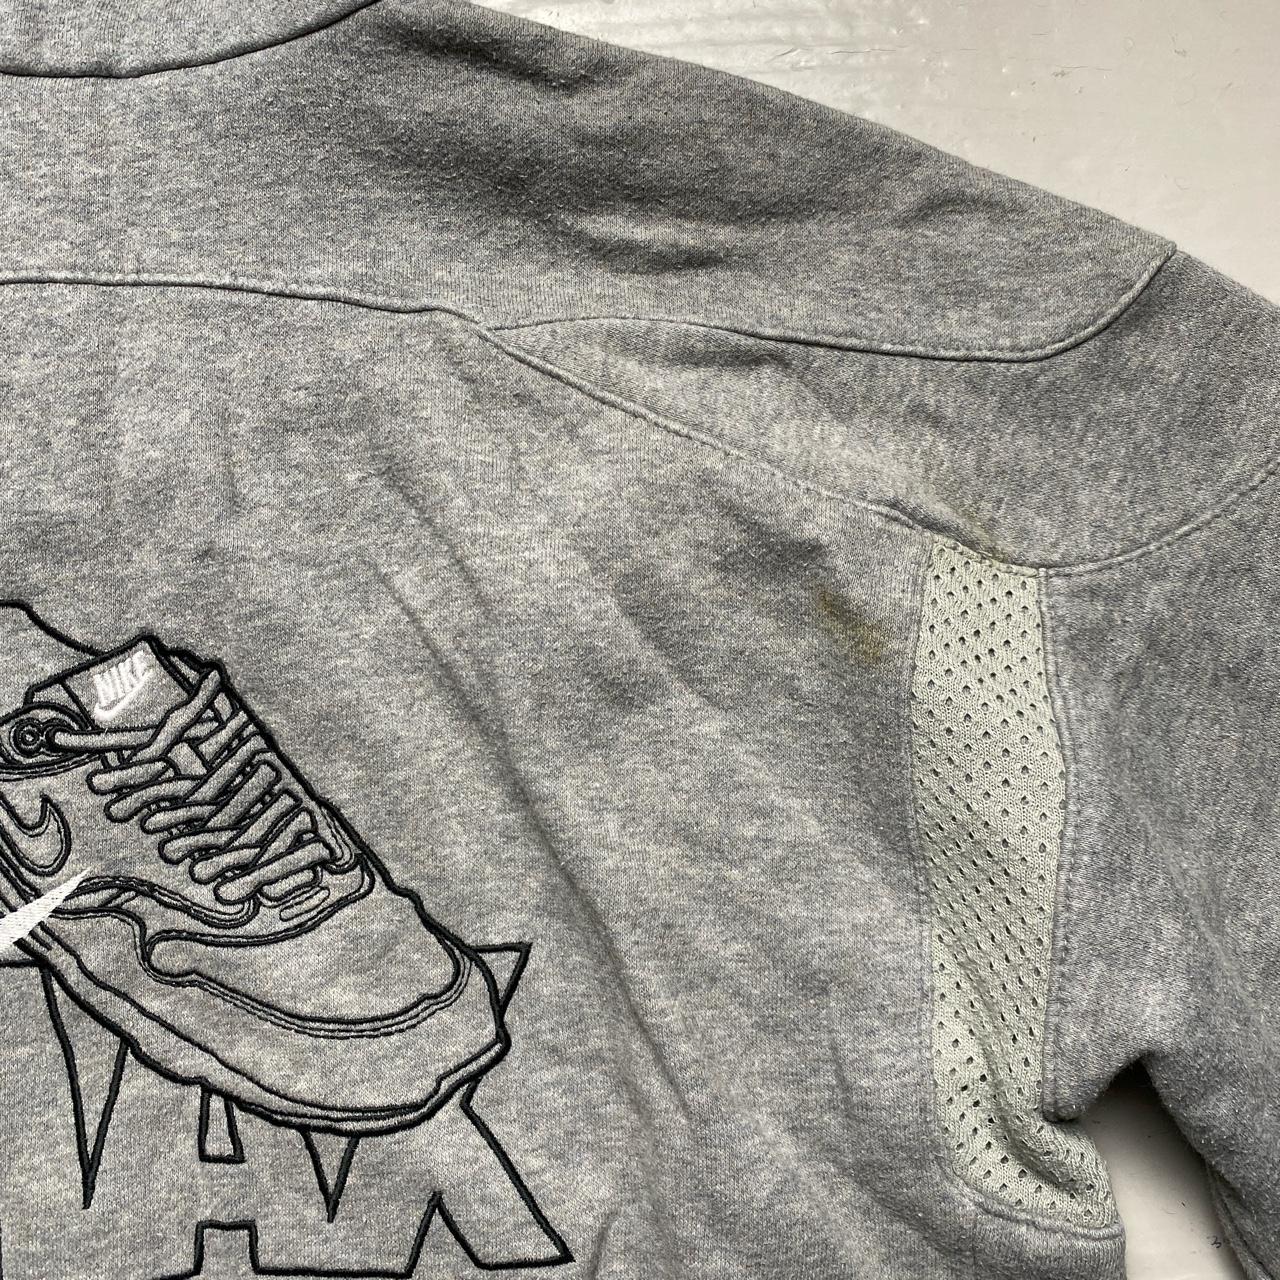 Nike Air Max Vintage Grey Black and White Embroidery Hoodie